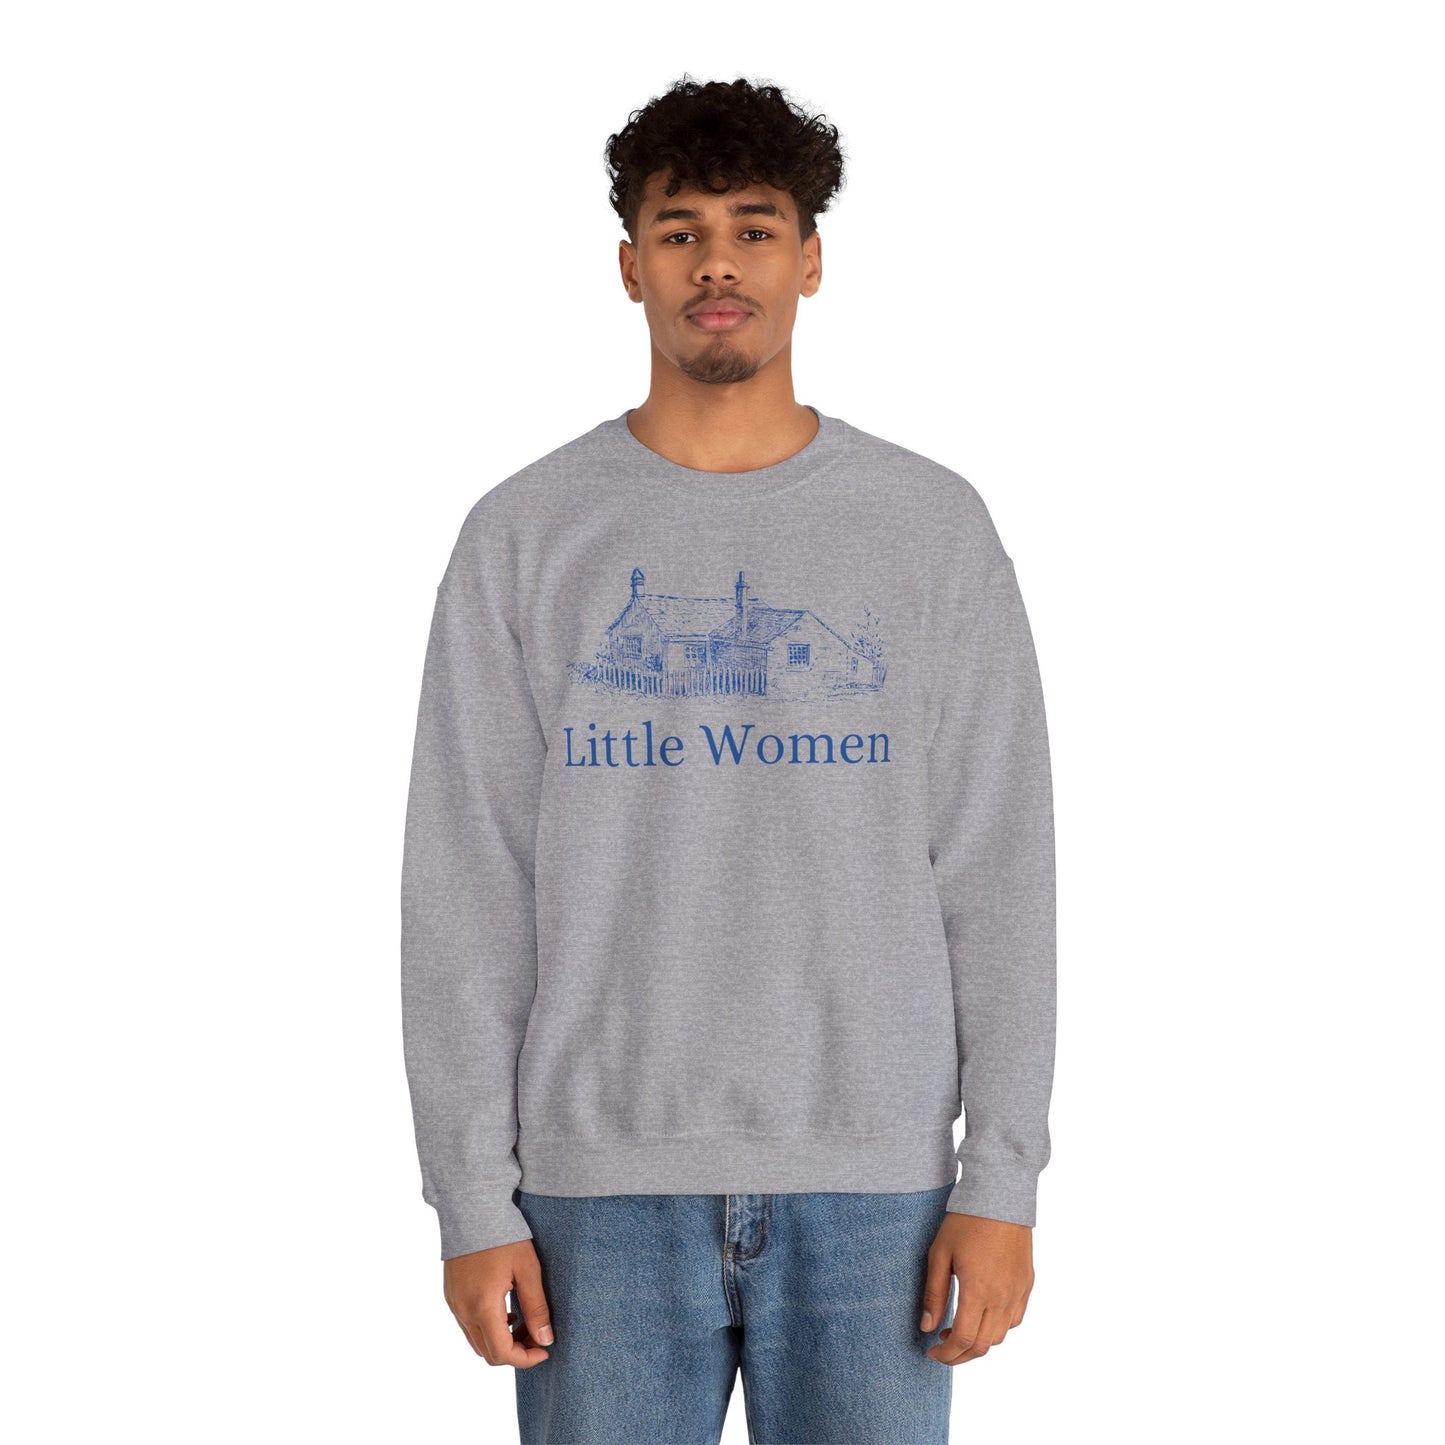 Little Women Crewneck Sweatshirt